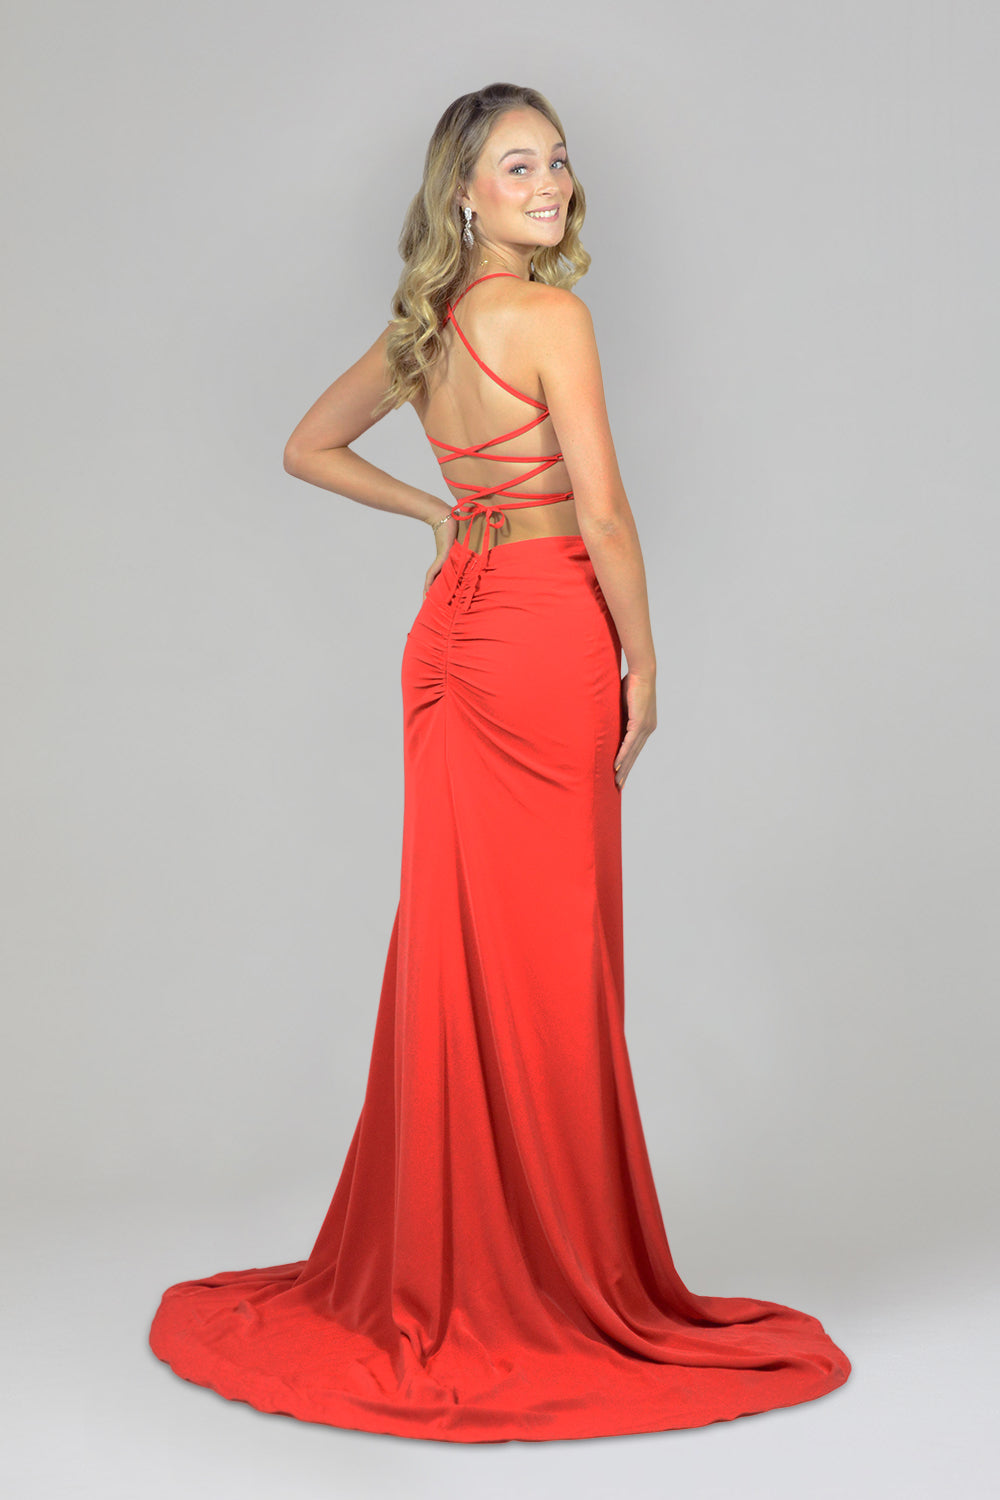 custom red ball dresses backless style perth australia envious bridal & formal